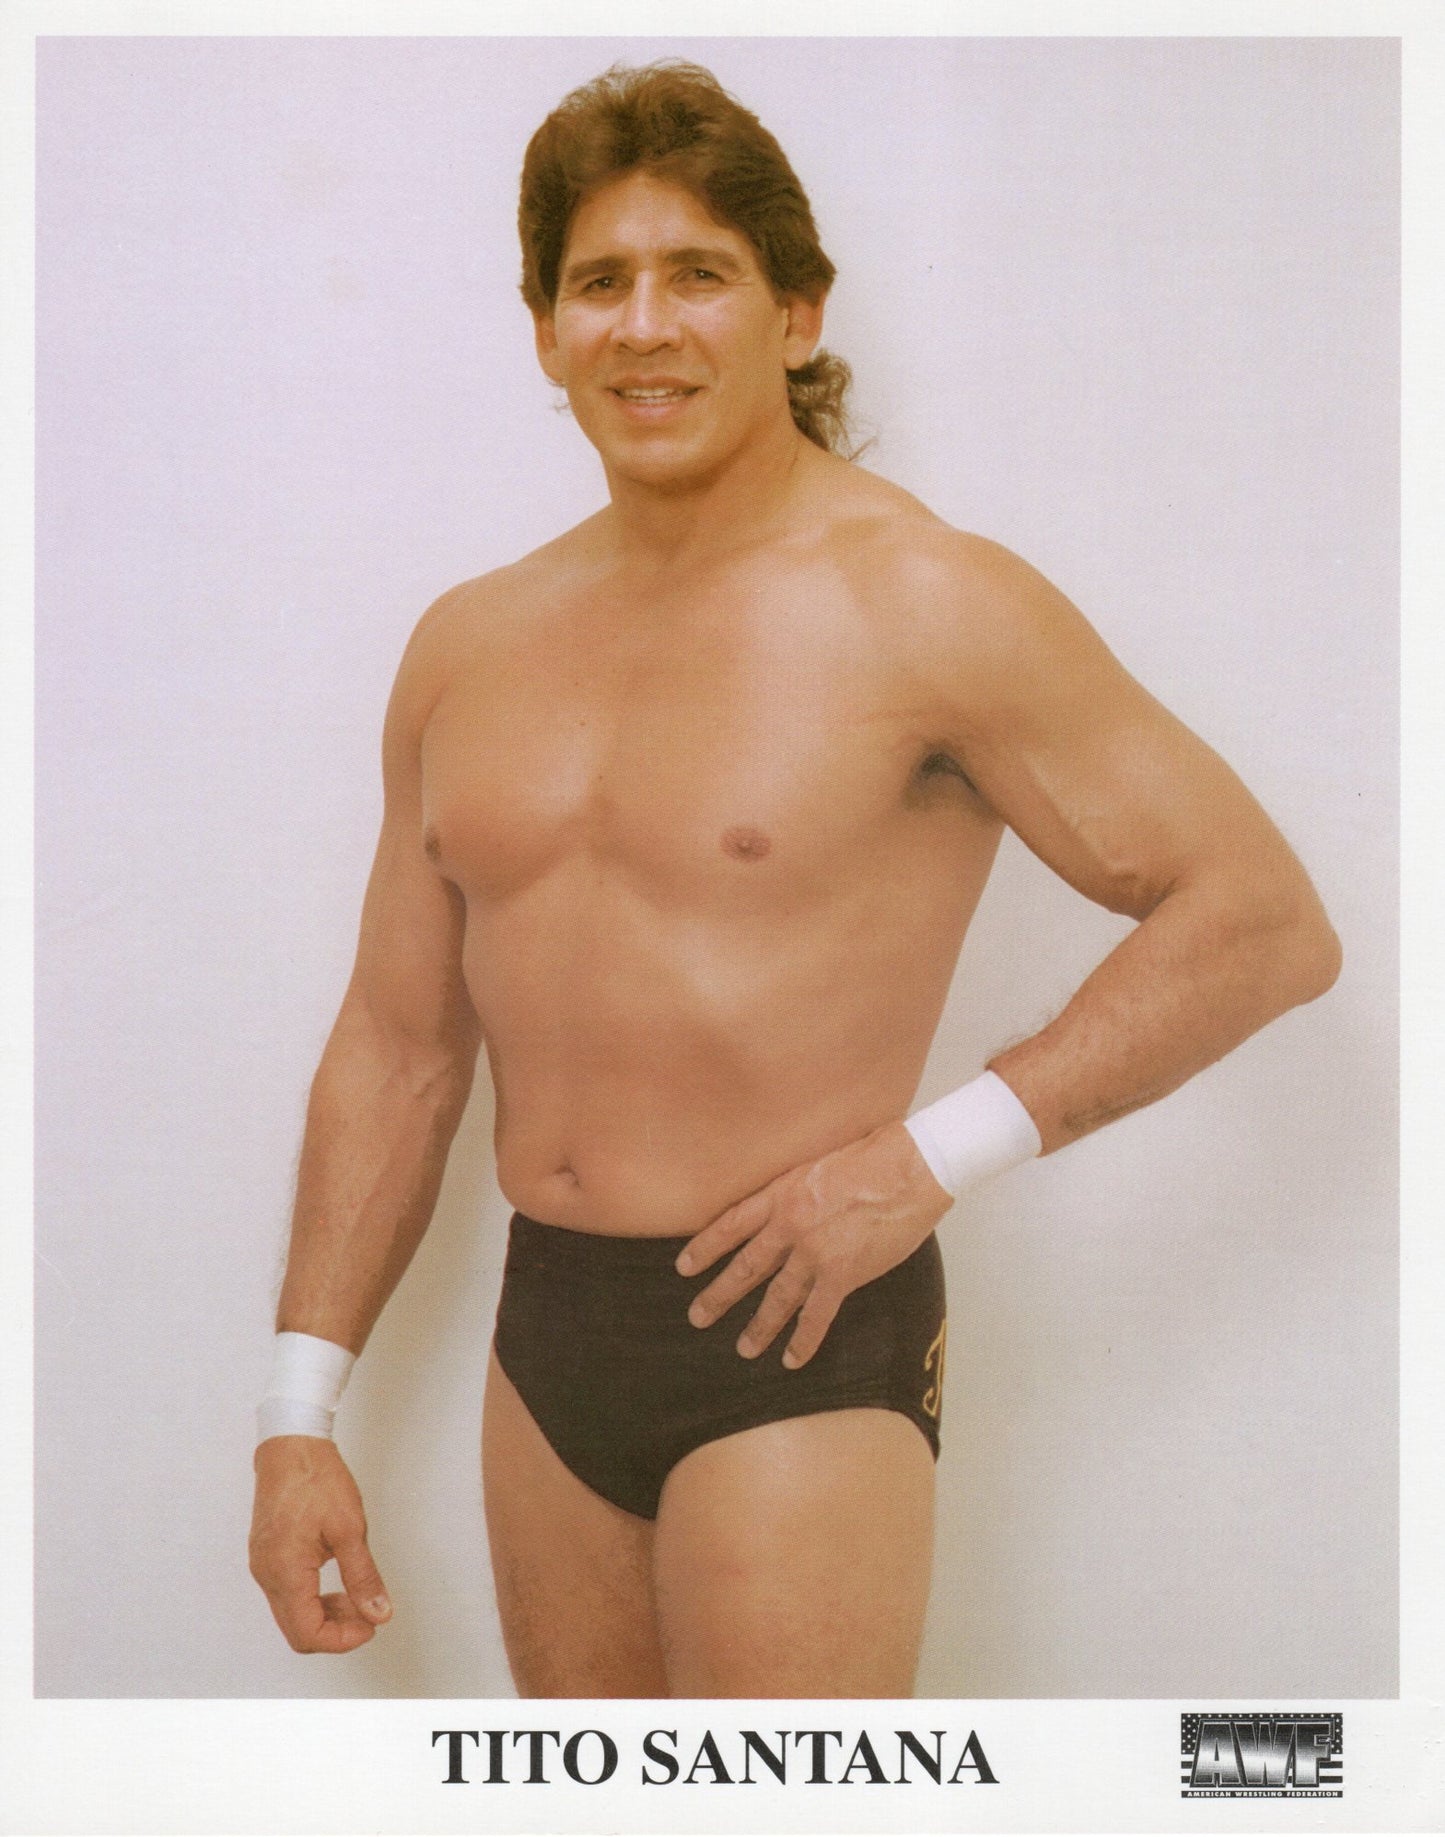 Tito Santana AWF American Wrestling Federation 8"x10" Promo Photo